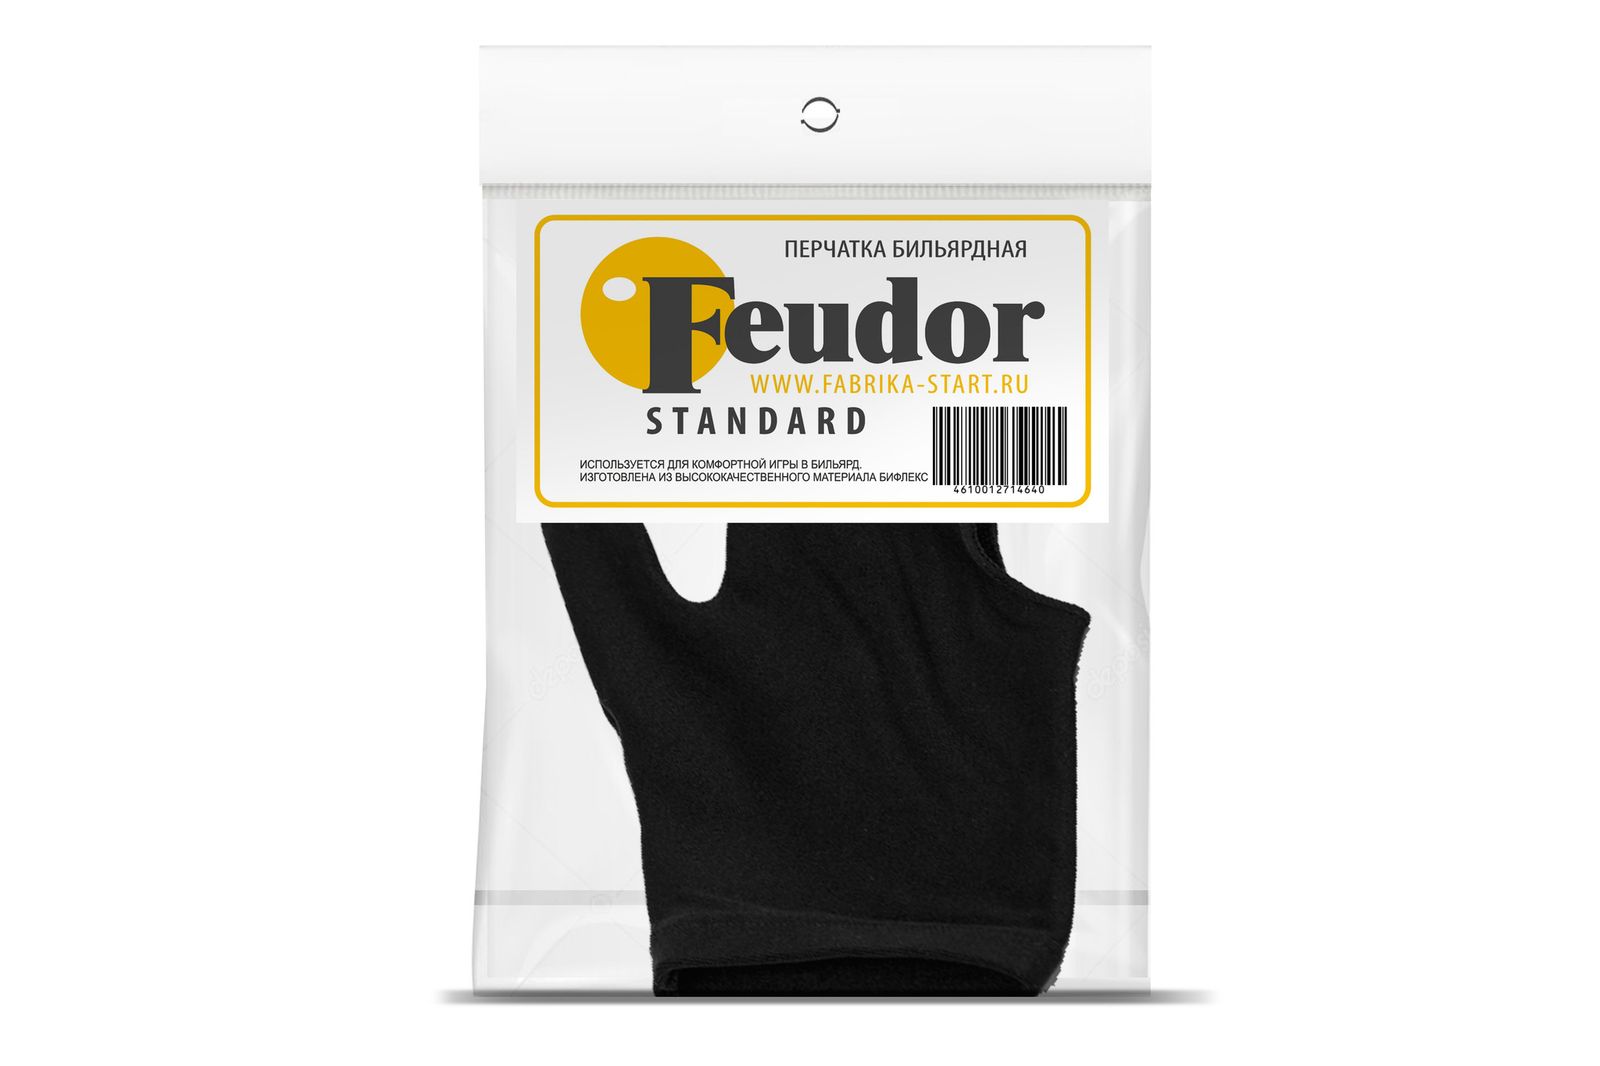 Перчатка-бильярдная Feudor Standard black XL фото №3